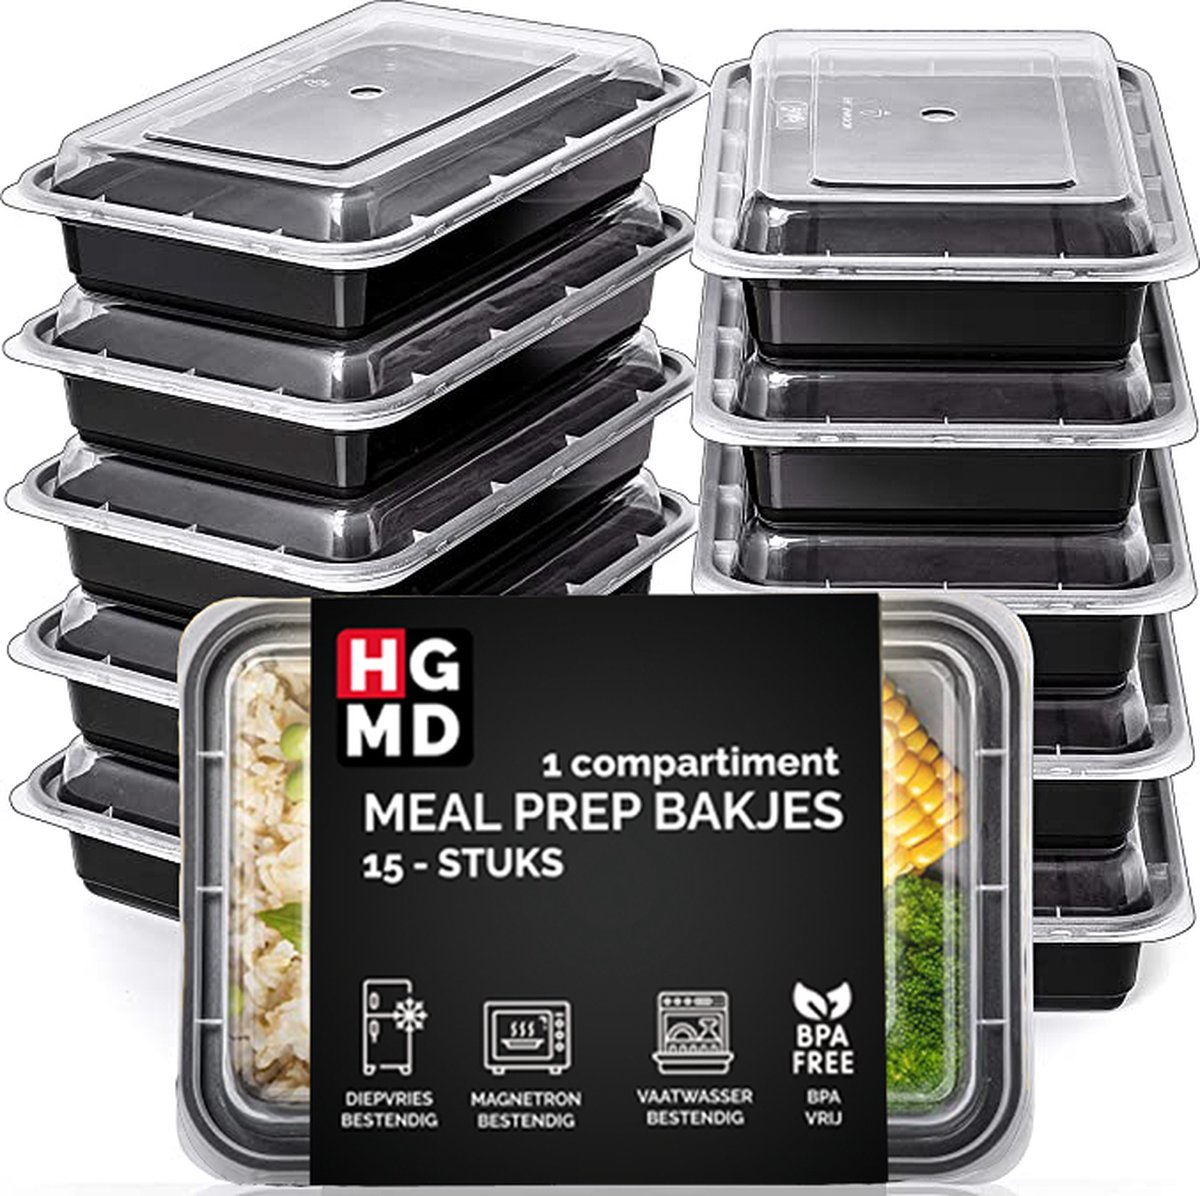 HGMD® Meal Prep Bakjes - 15 stuks - 1 compartiment - Lunchbox - Diepvriesbakjes - Vershoudbakjes - Plastic Bakjes Met Deksel - Magnetron Bakjes Met Deksel - Meal Prep - Vershouddoos - 1L - BPA vrij